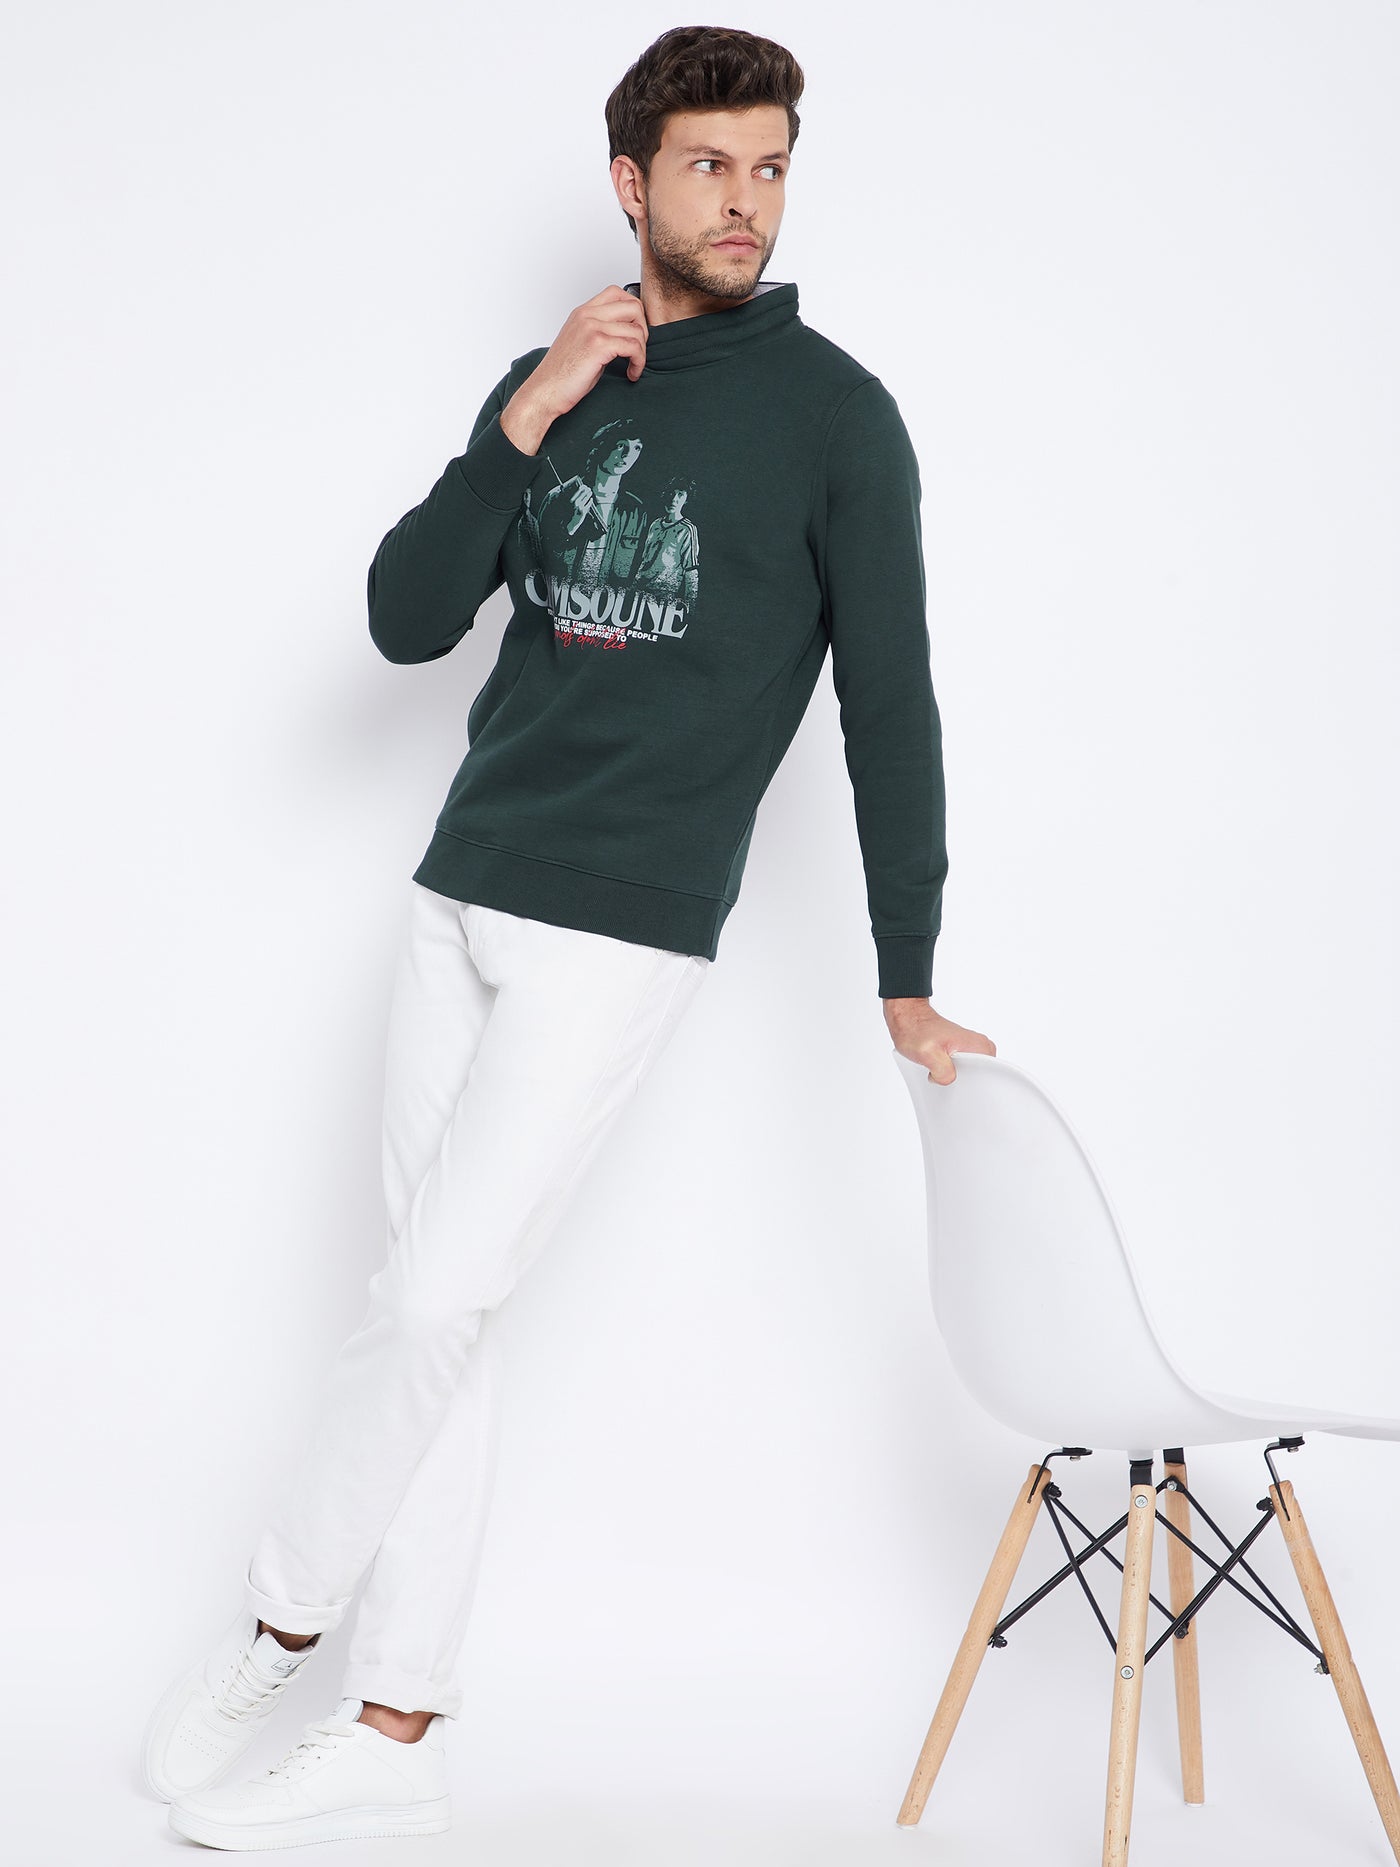 Green Printed High Neck Sweatshirt - Men Sweatshirts